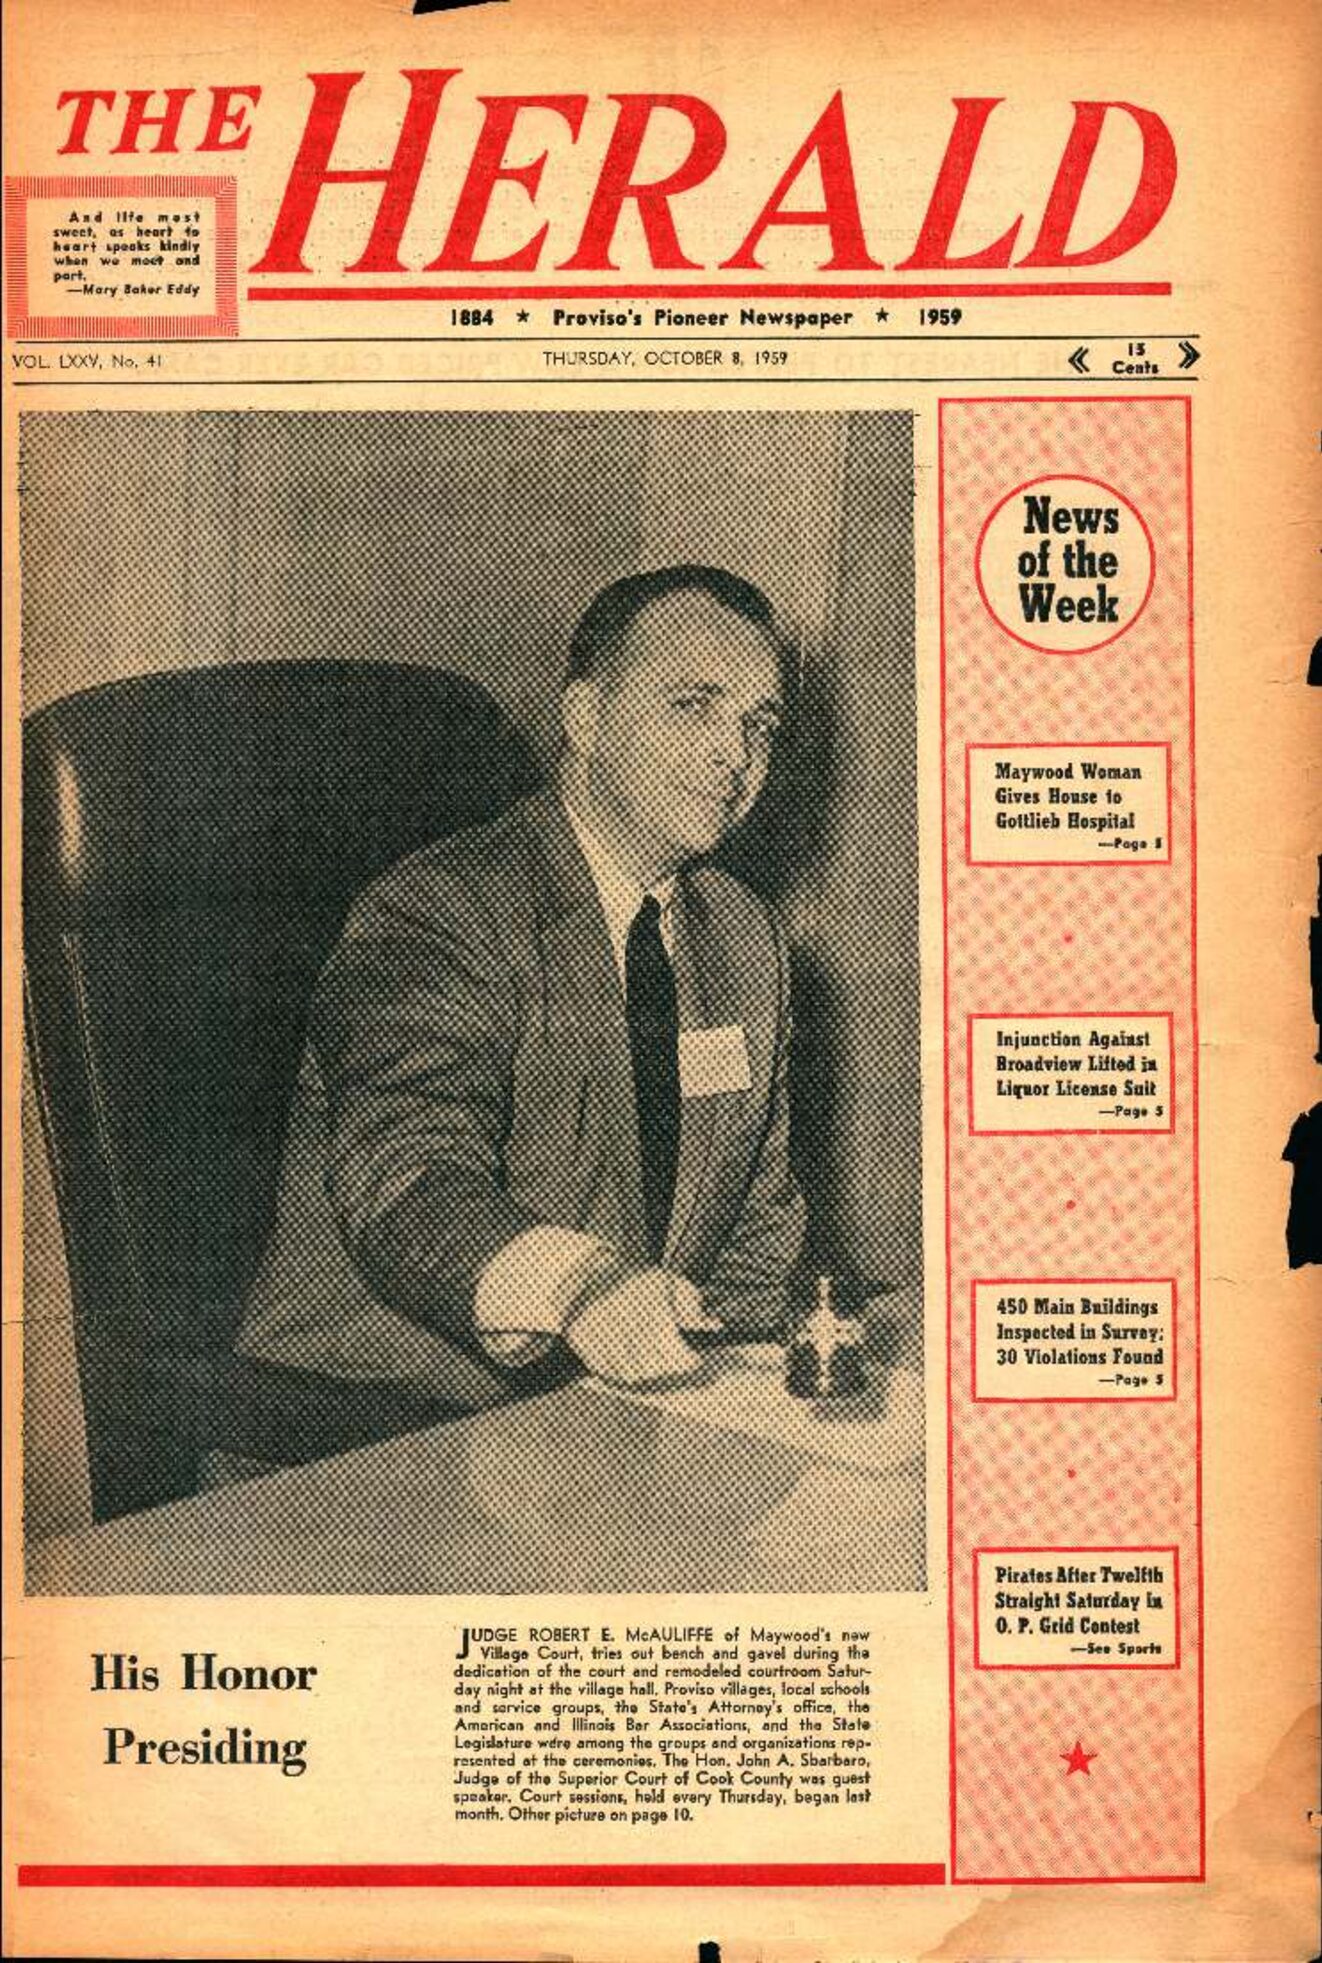 The Herald – 19591008